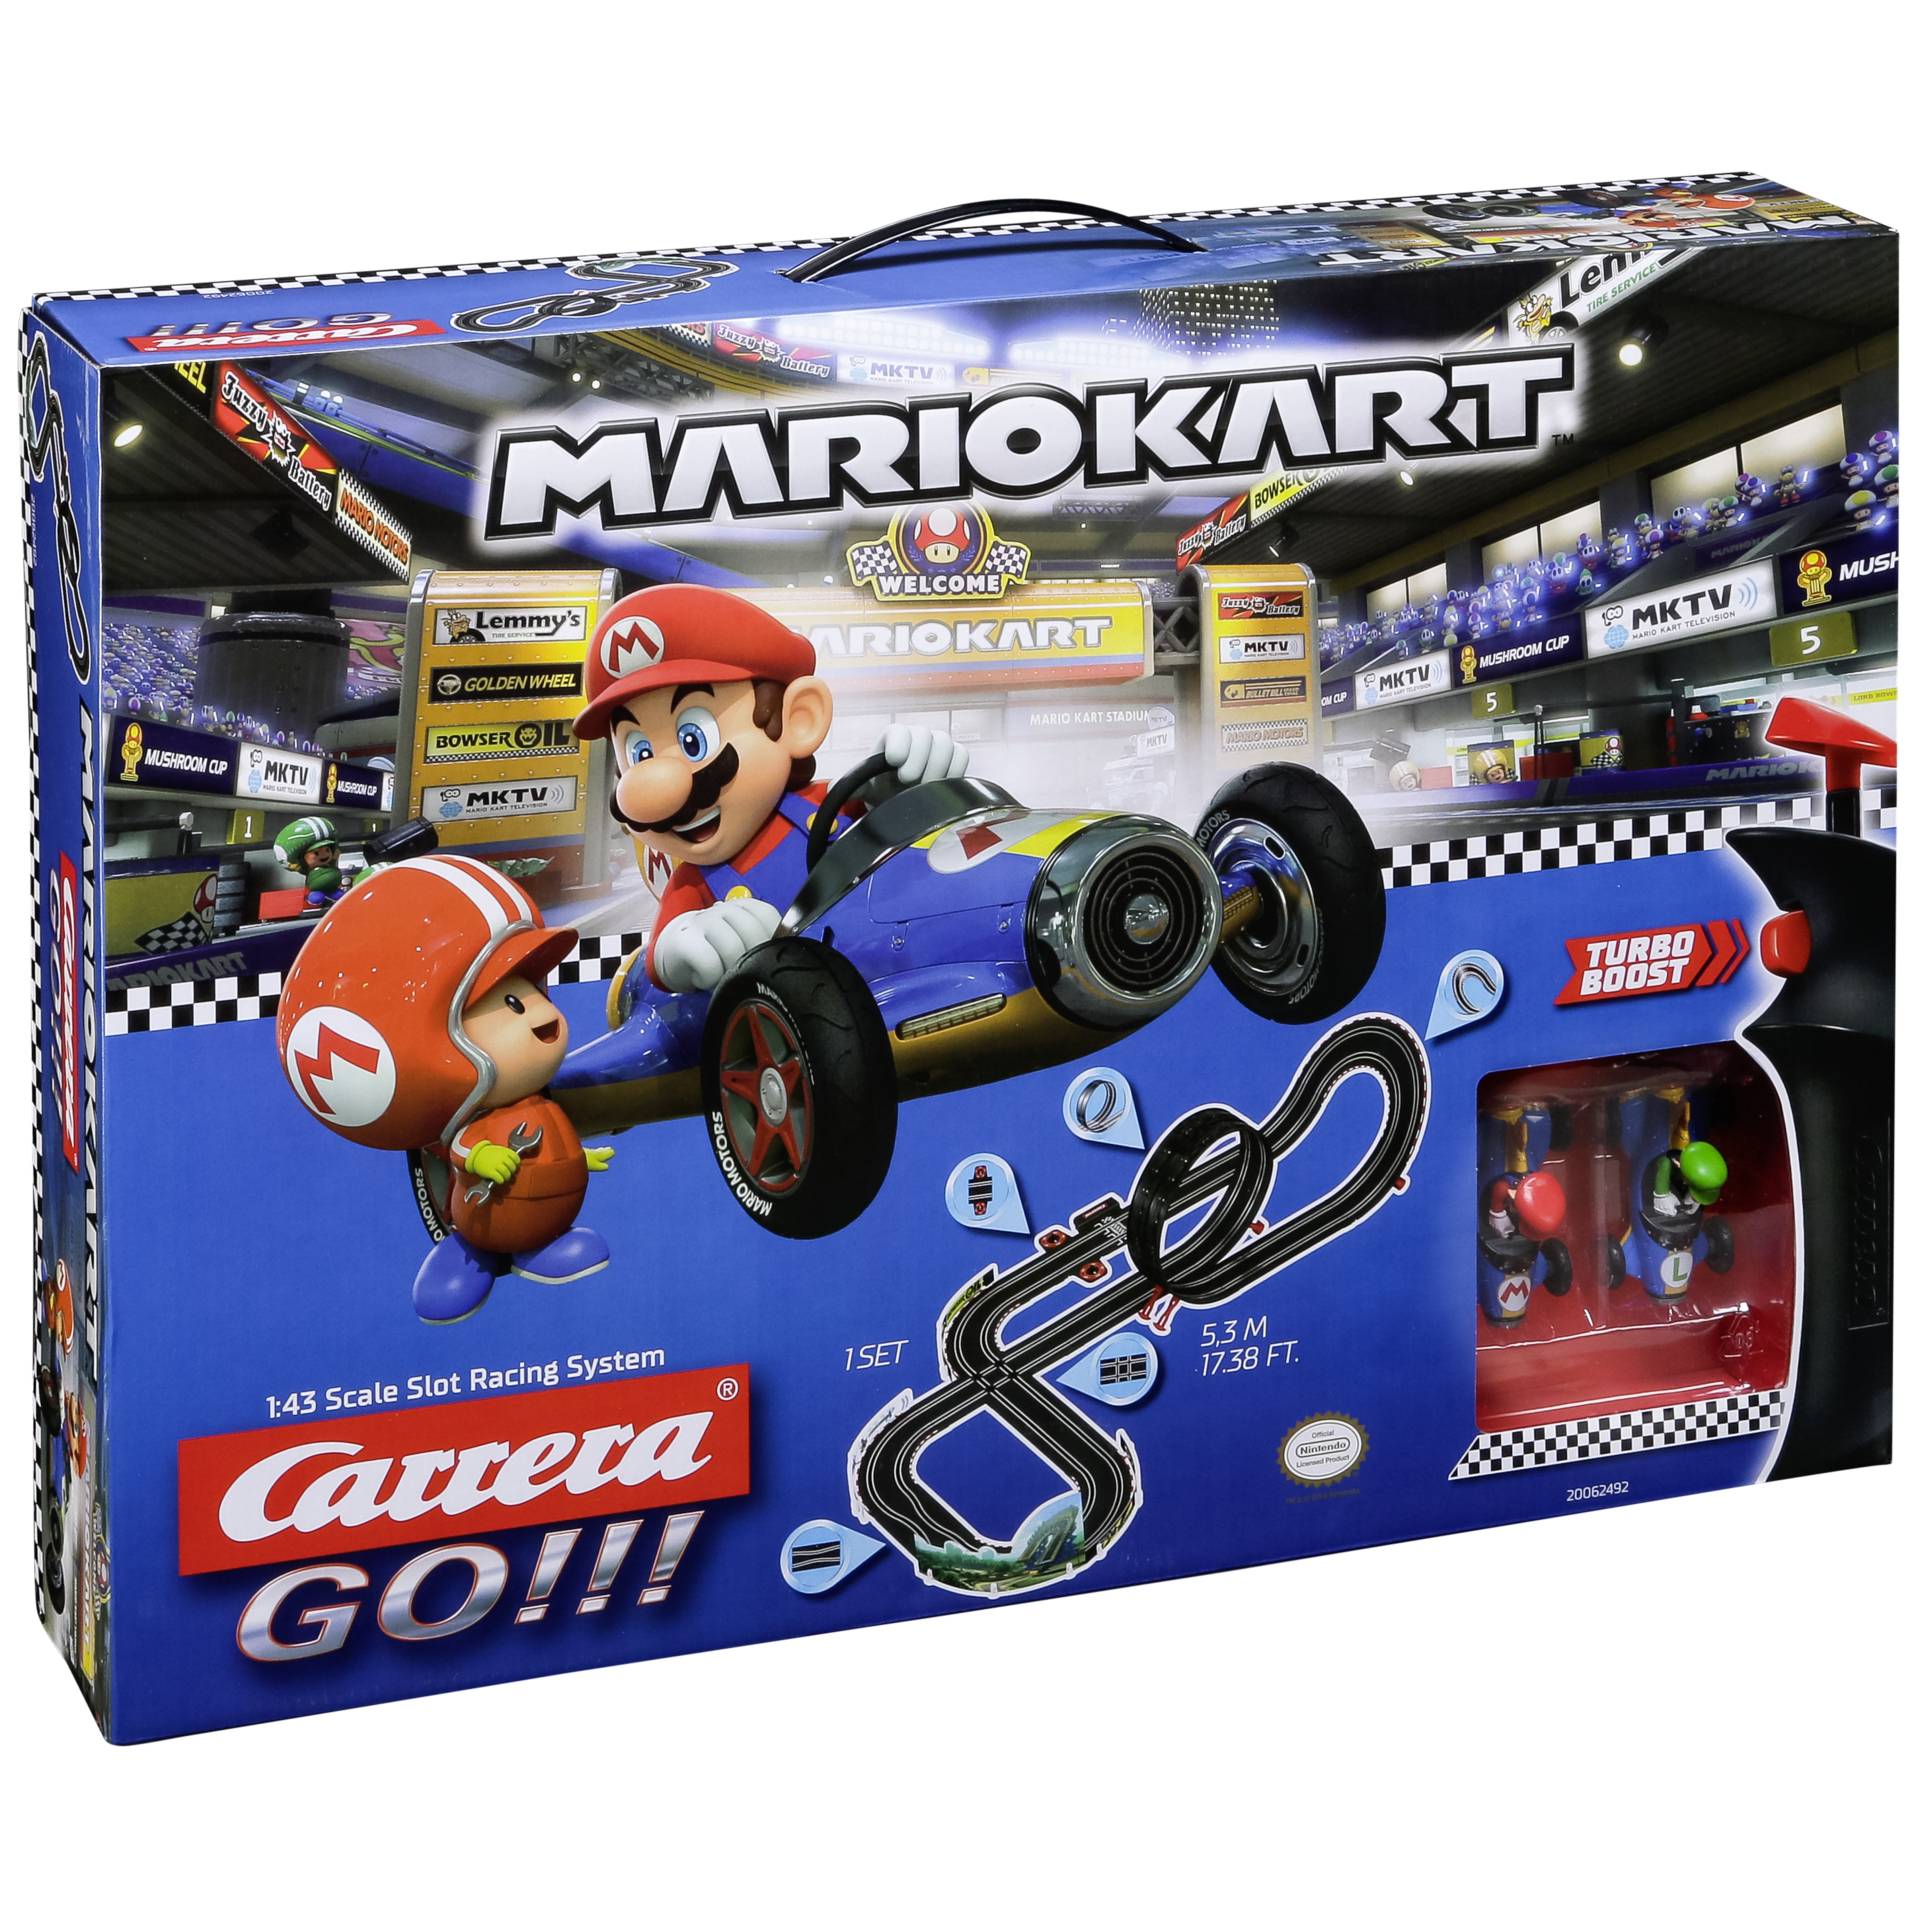 Carrera GO!!! Set - Nintendo Mario Kart - Mach 8 